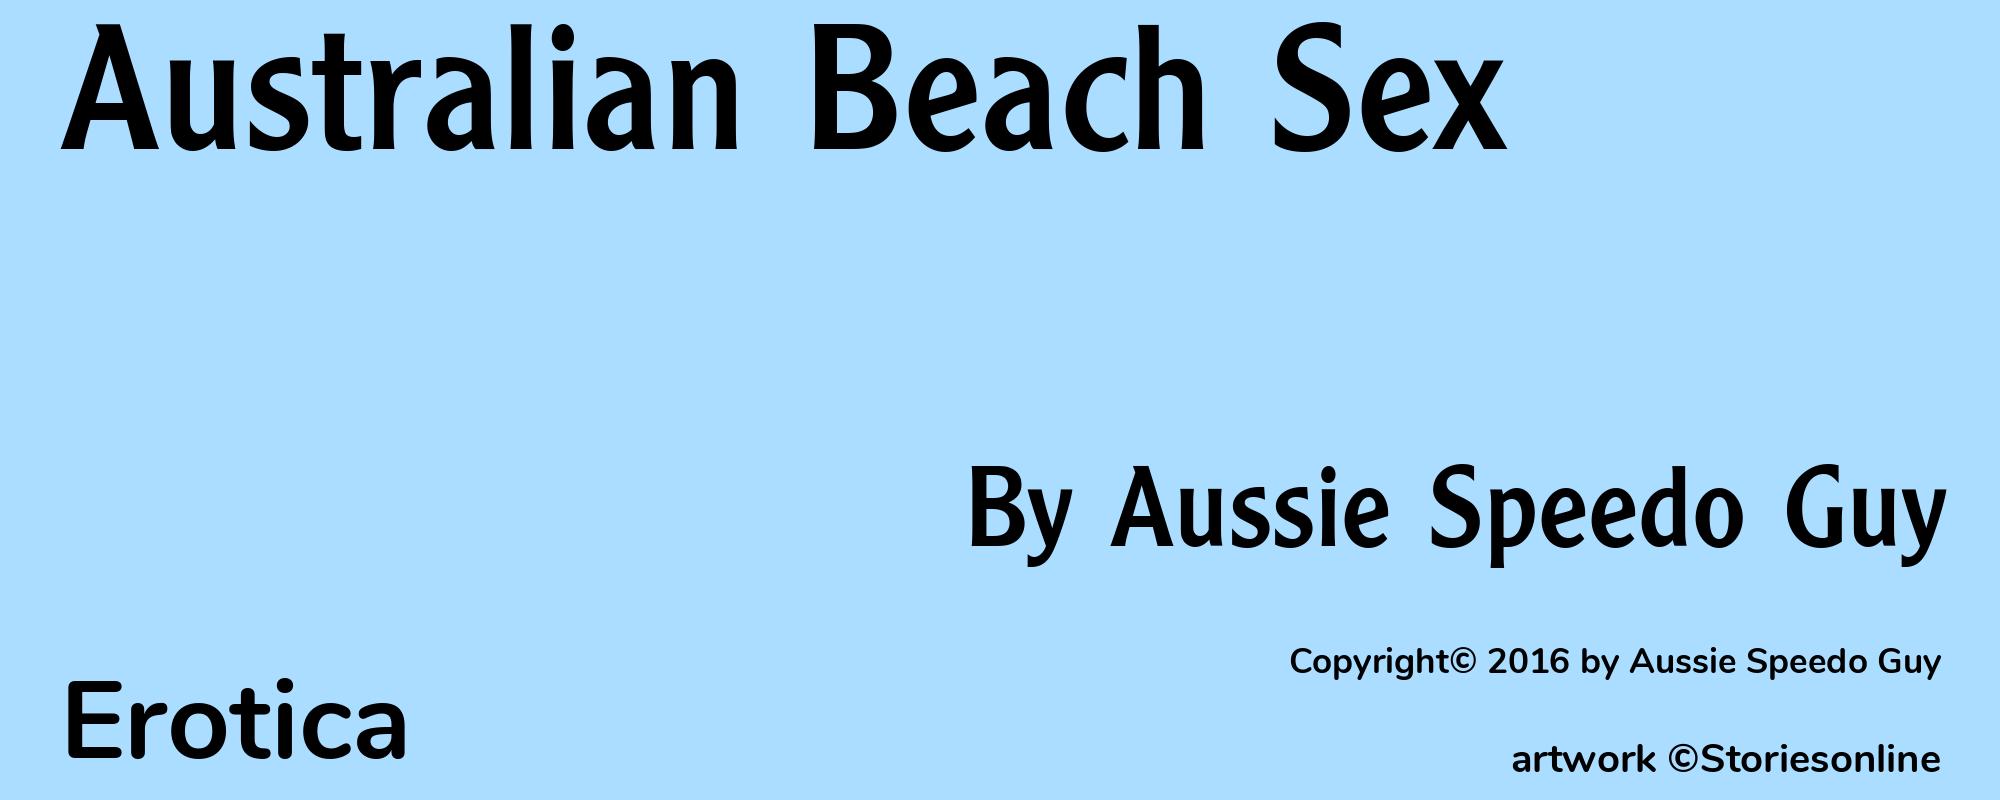 Australian Beach Sex - Cover